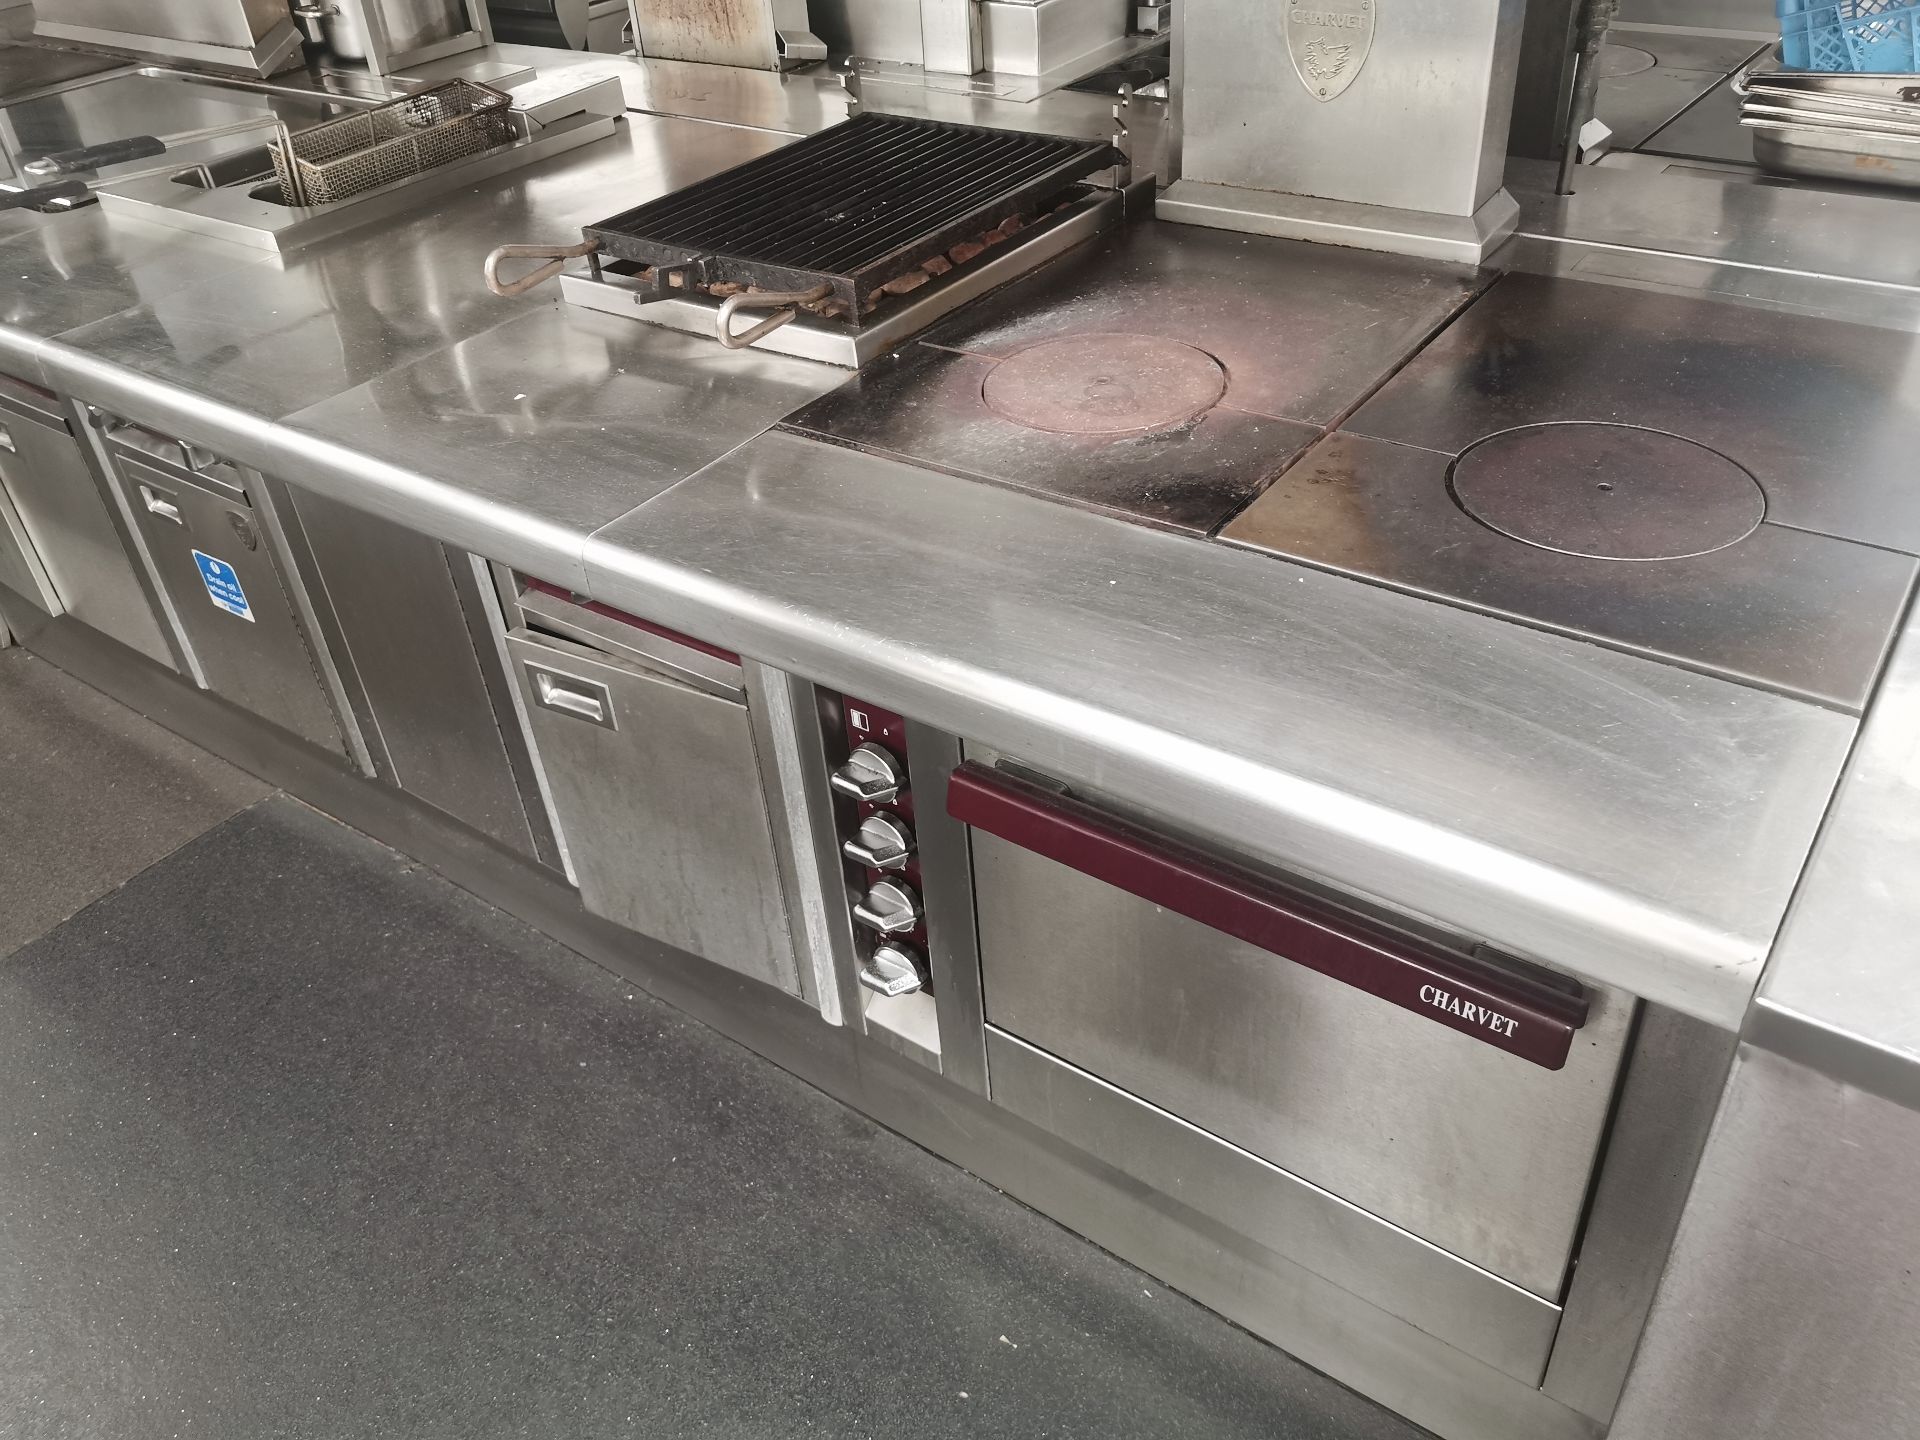 Charvet pro series heavy duty modular cooking rang - Image 5 of 12